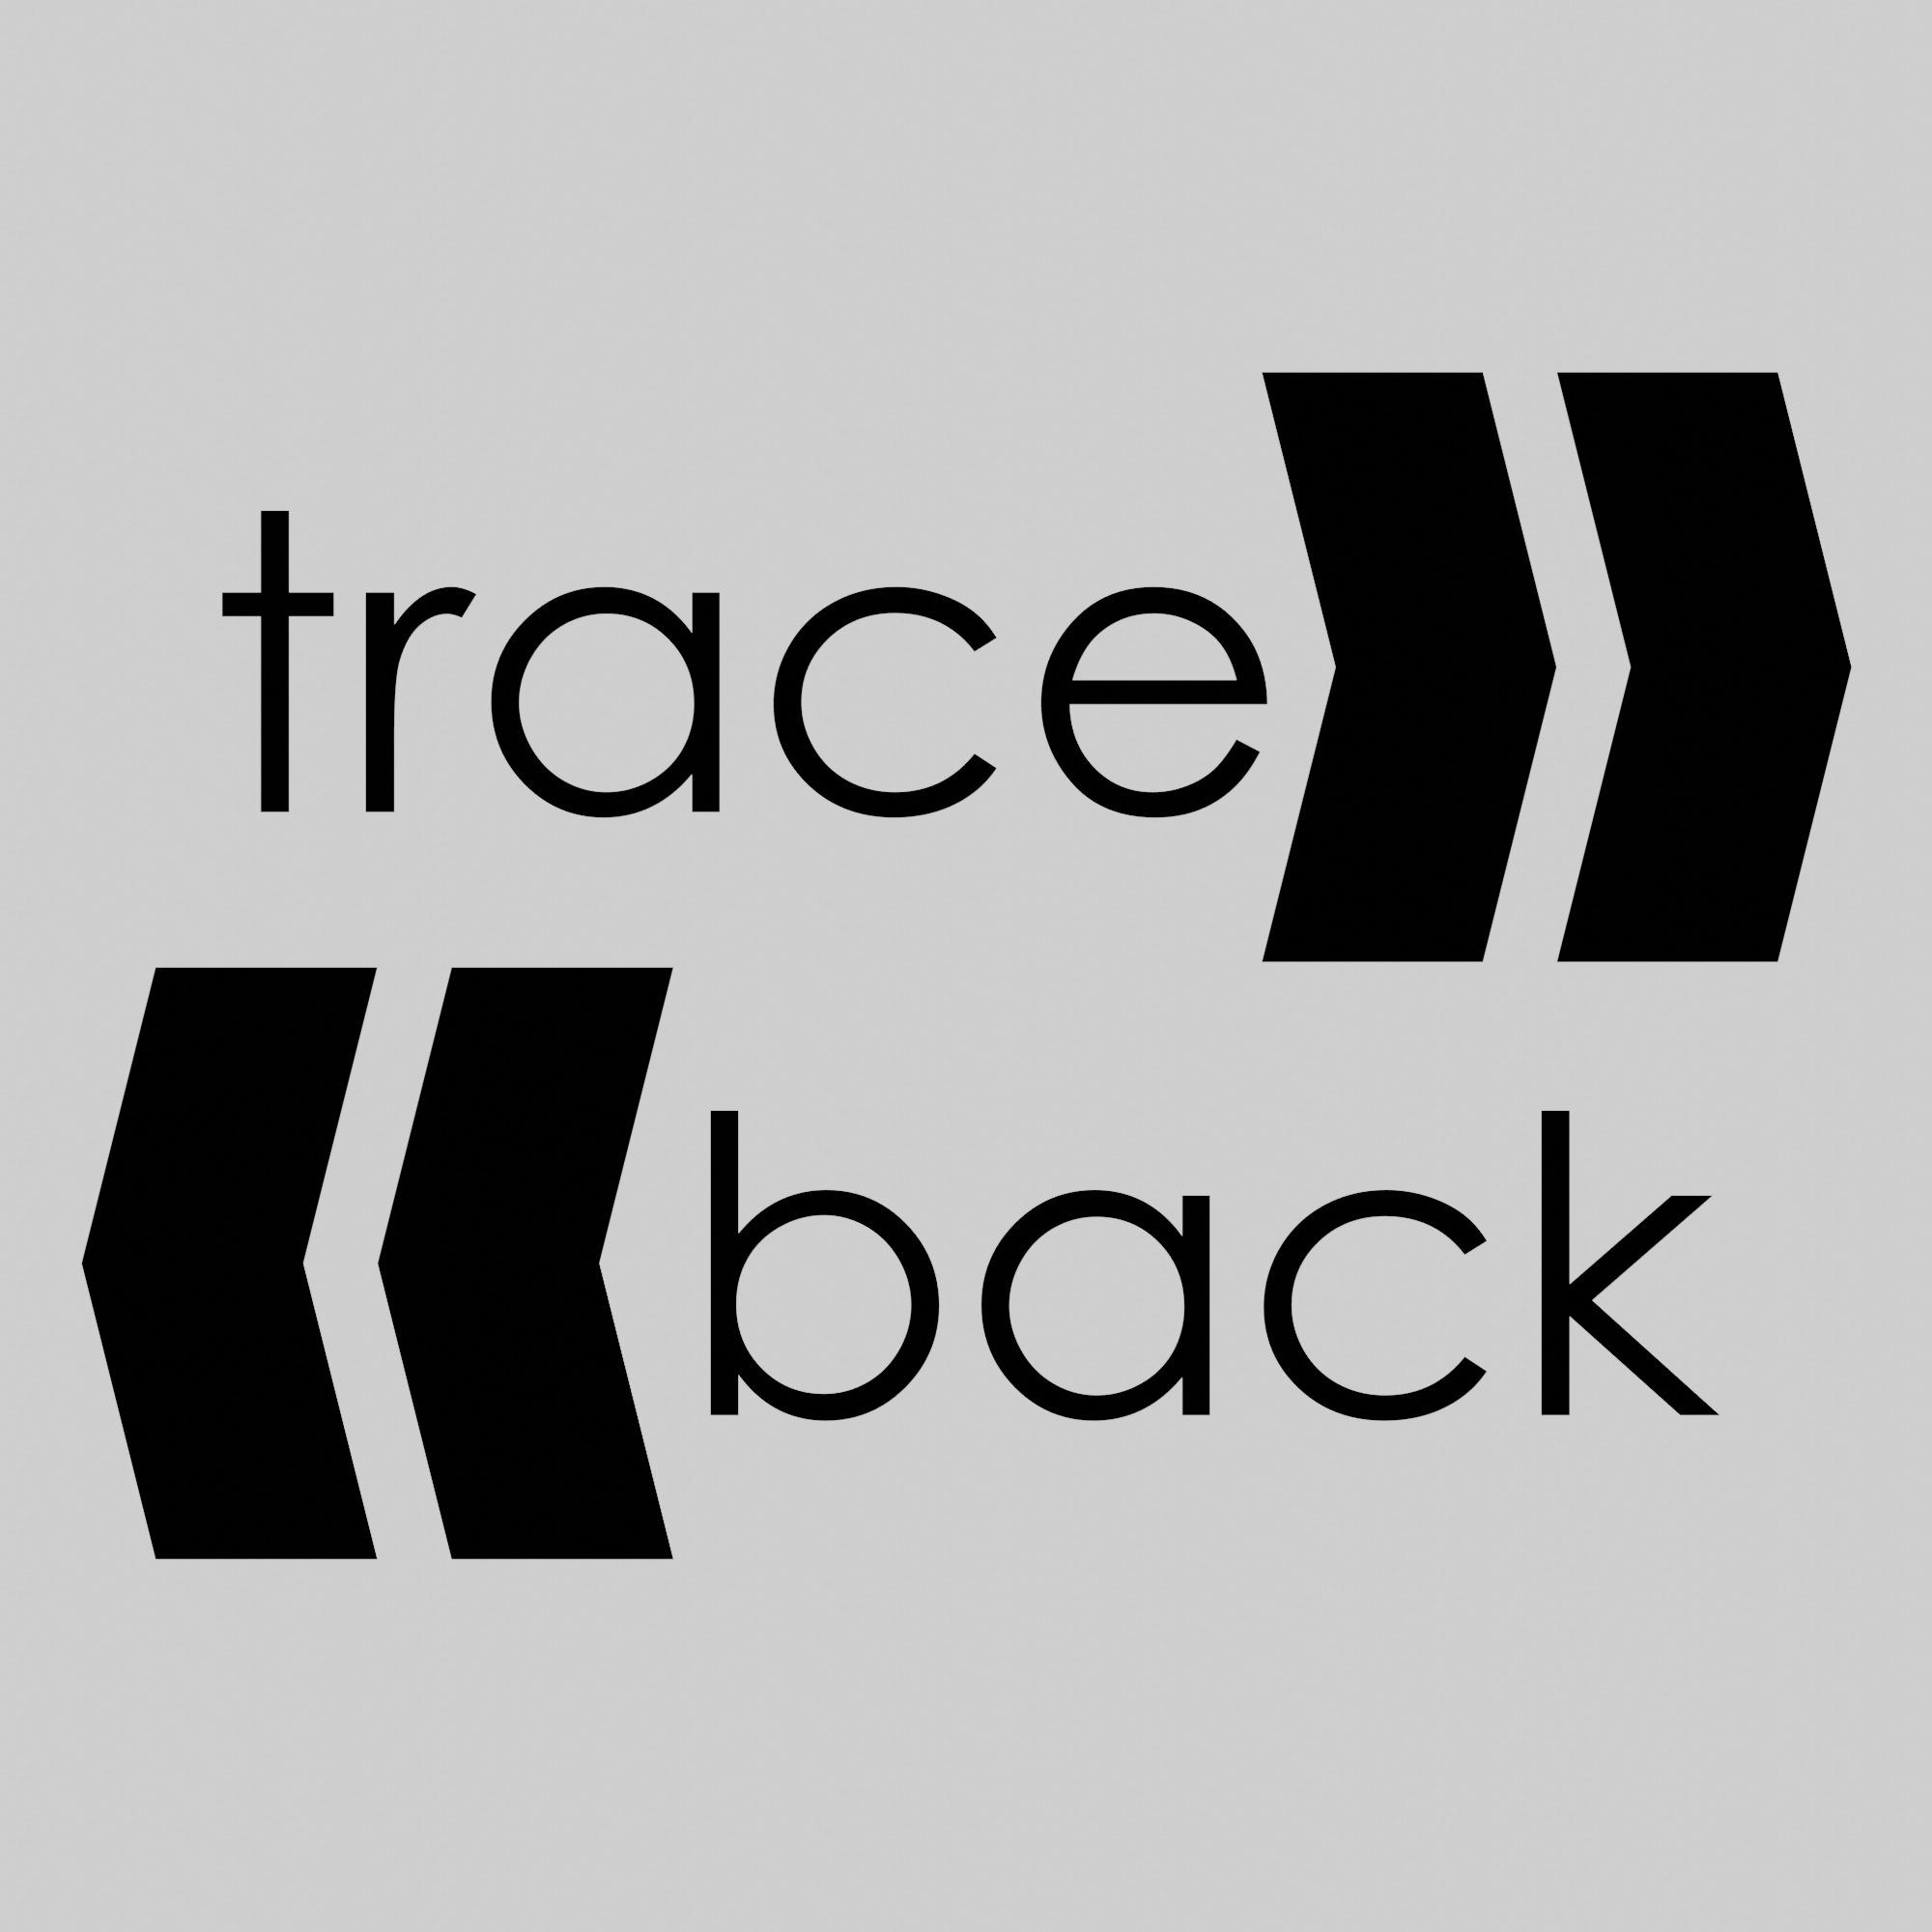 Traceback